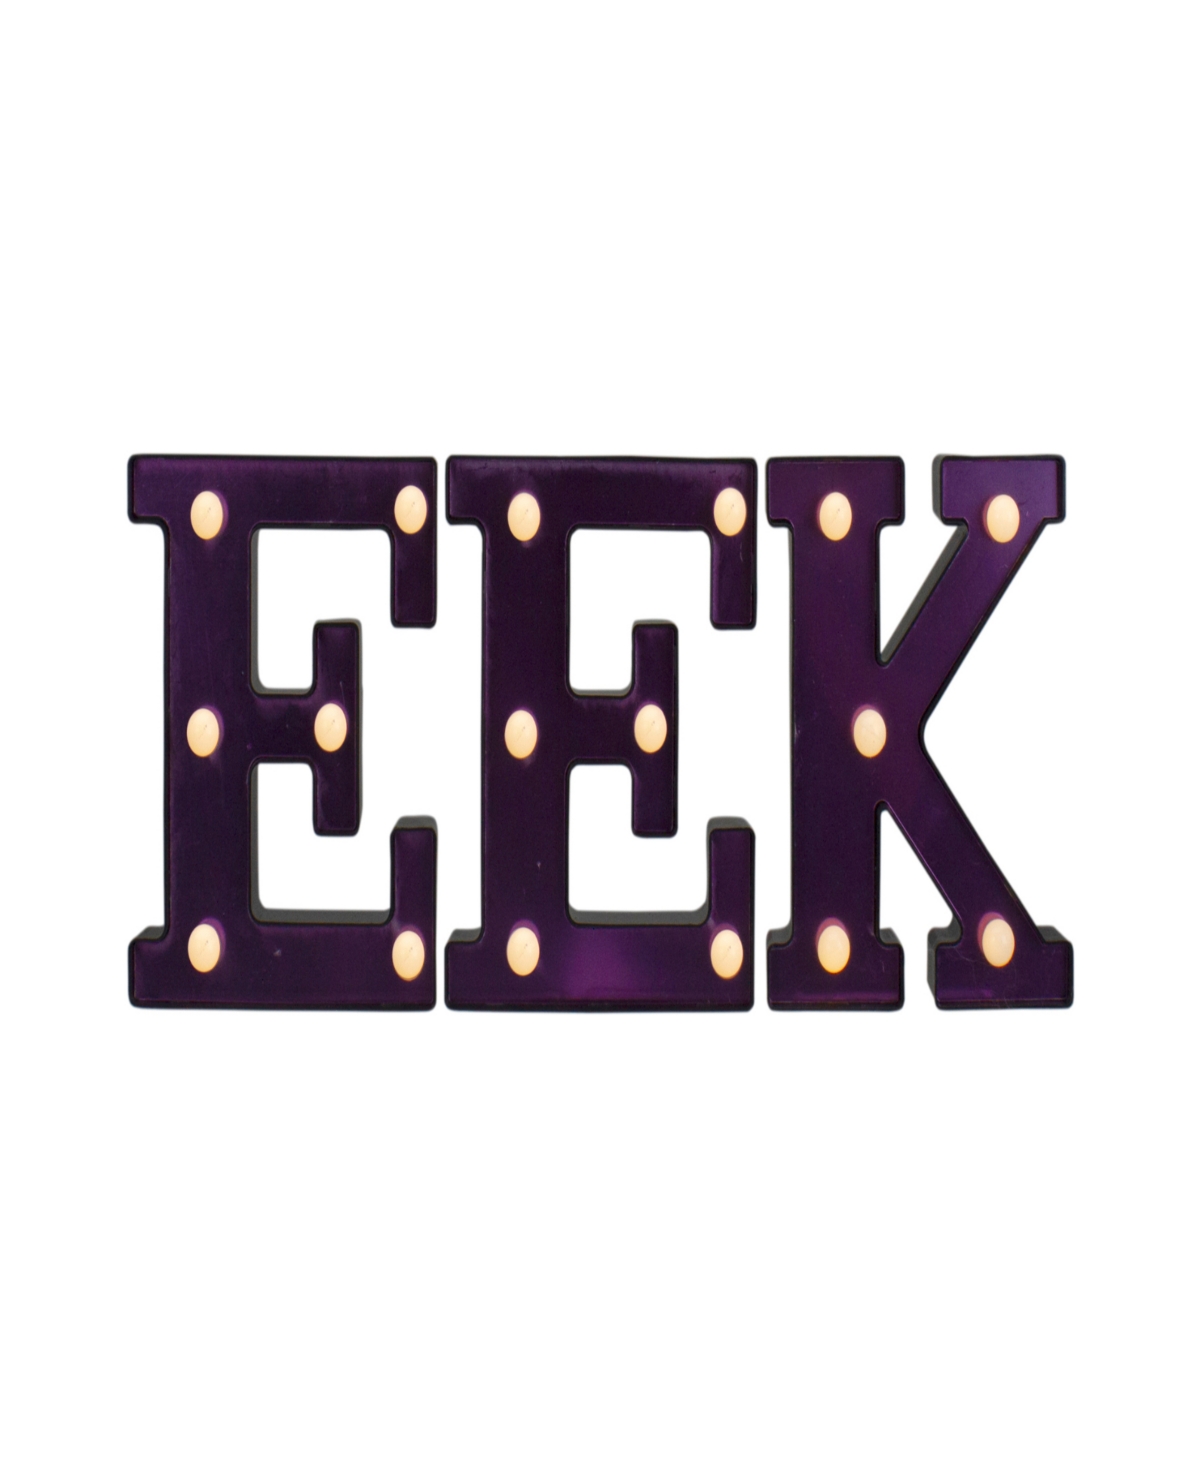 6.5" Led Lighted 'Eek' Halloween Marquee Sign - Black